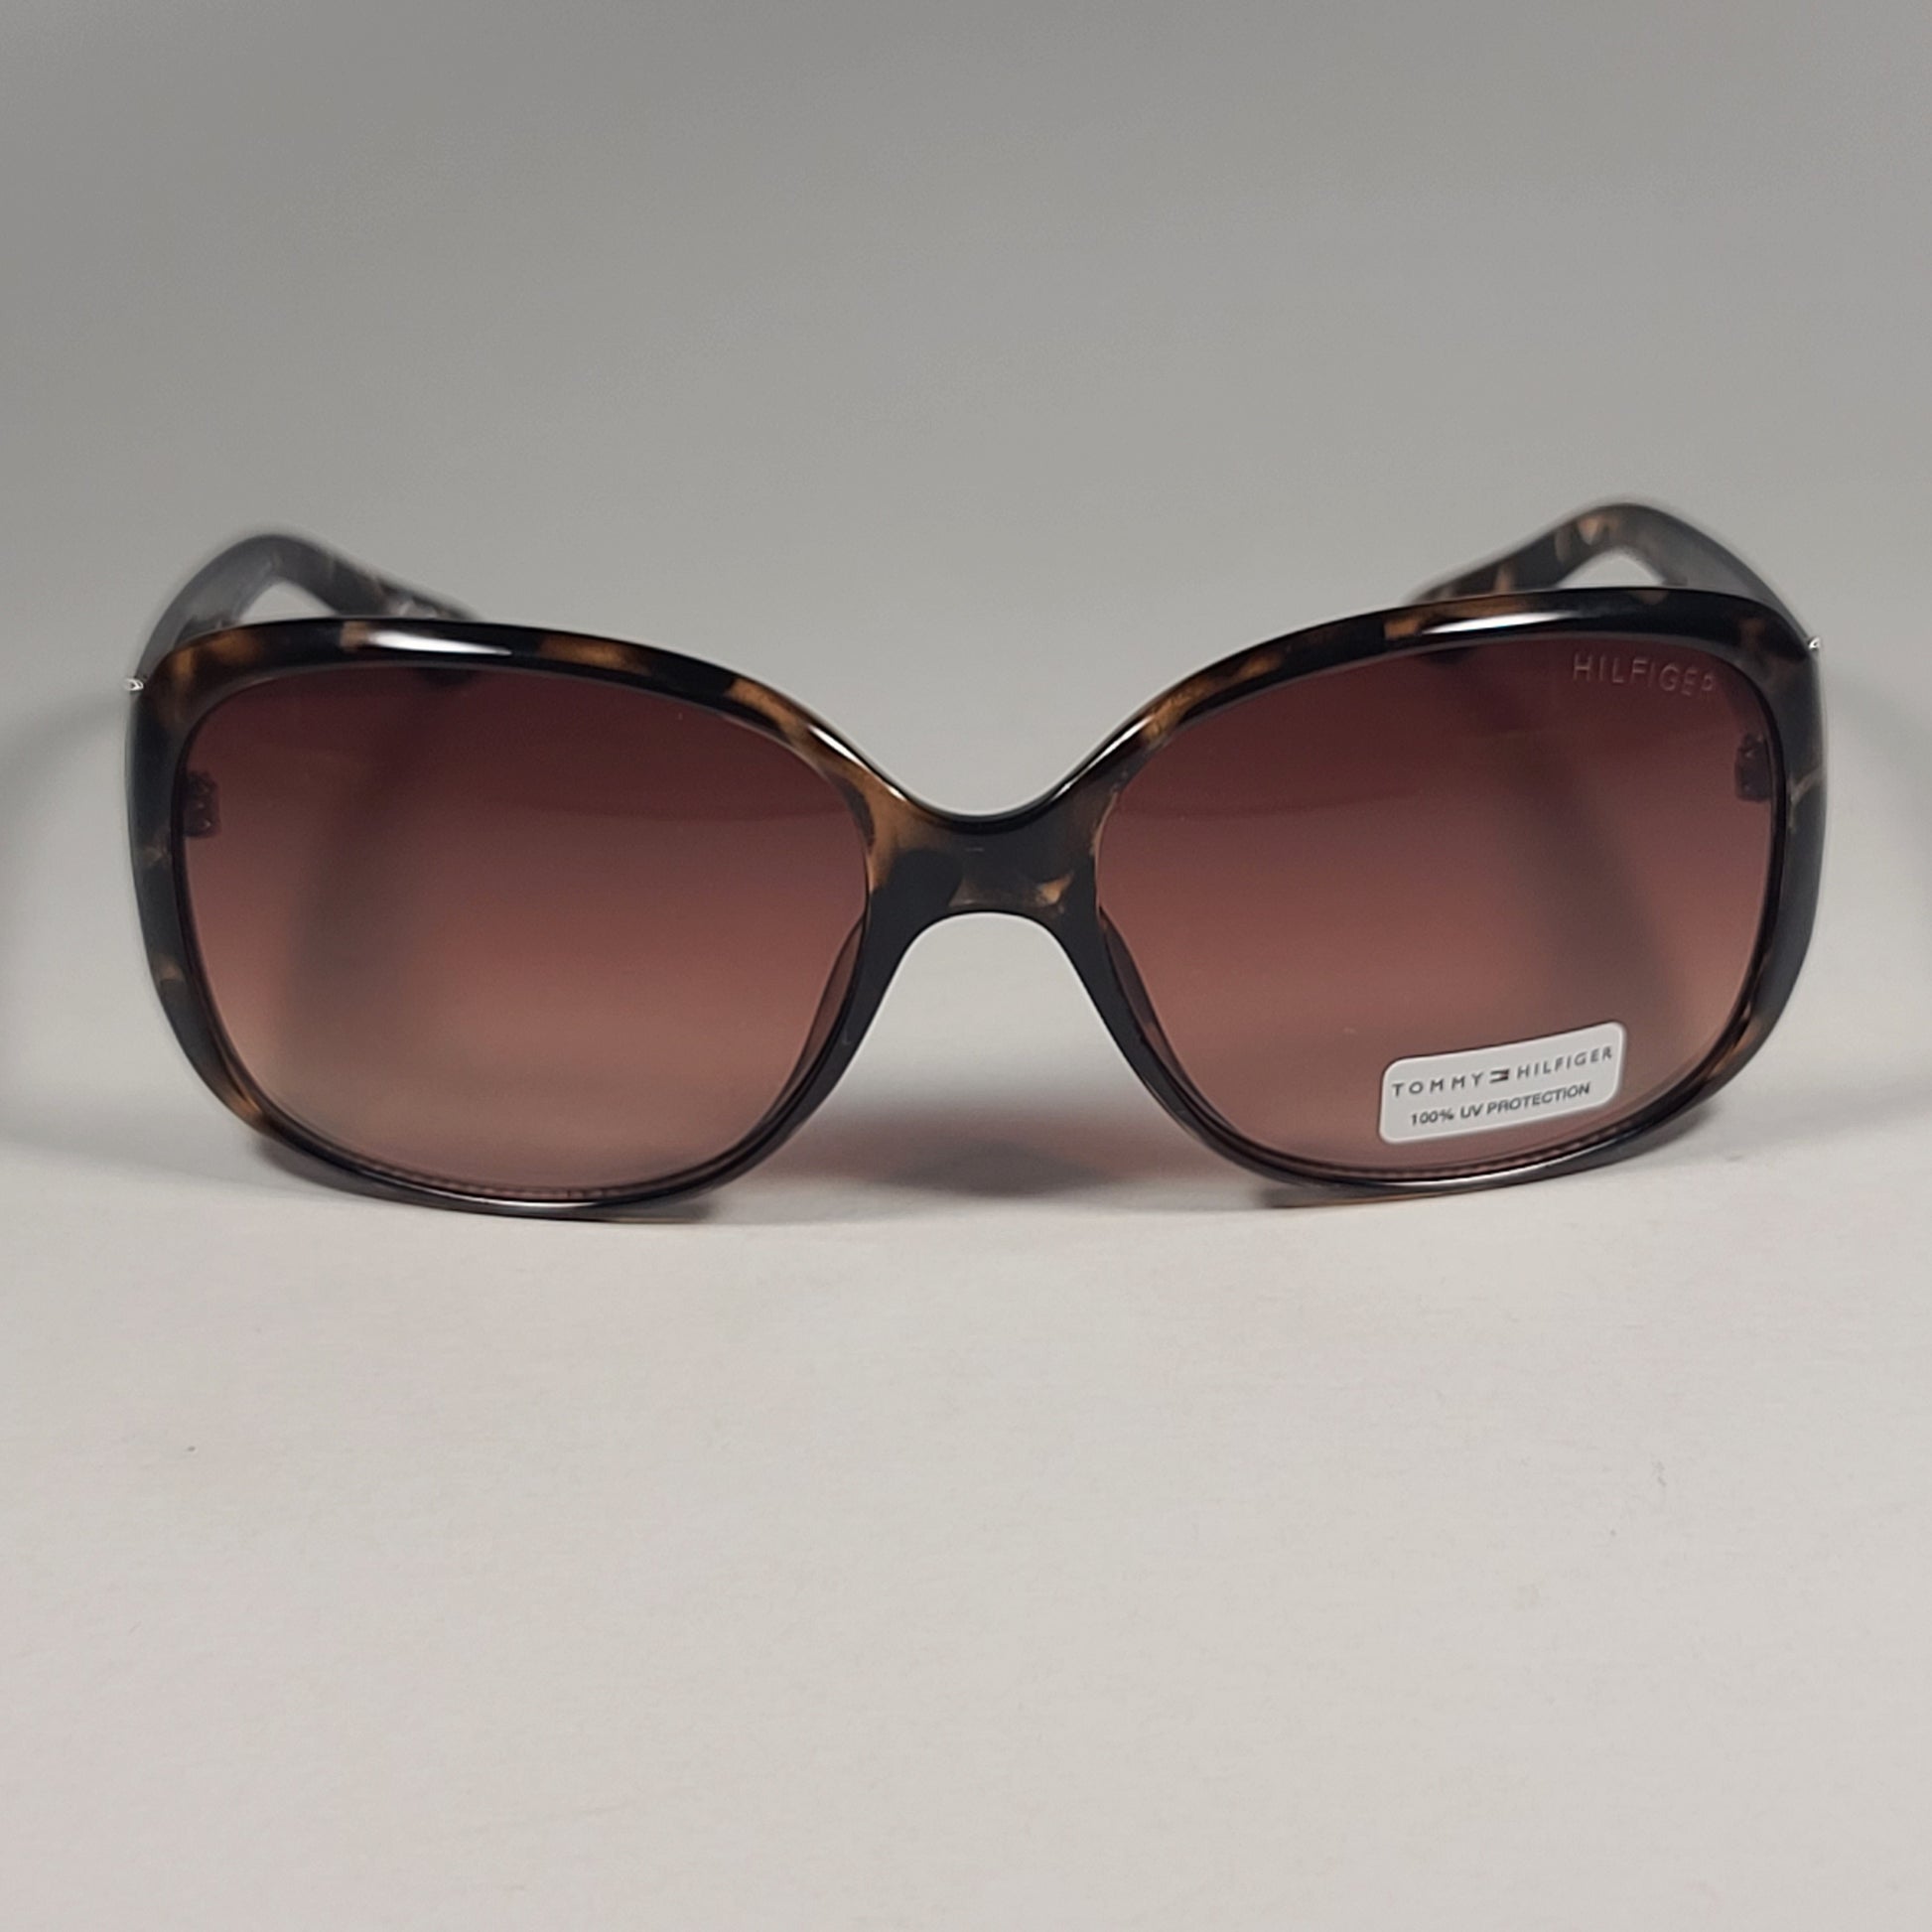 Tommy Hilfiger WP OL591 Oval Sunglasses Brown Tortoise Frame Brown Gradient Lens - Sunglasses